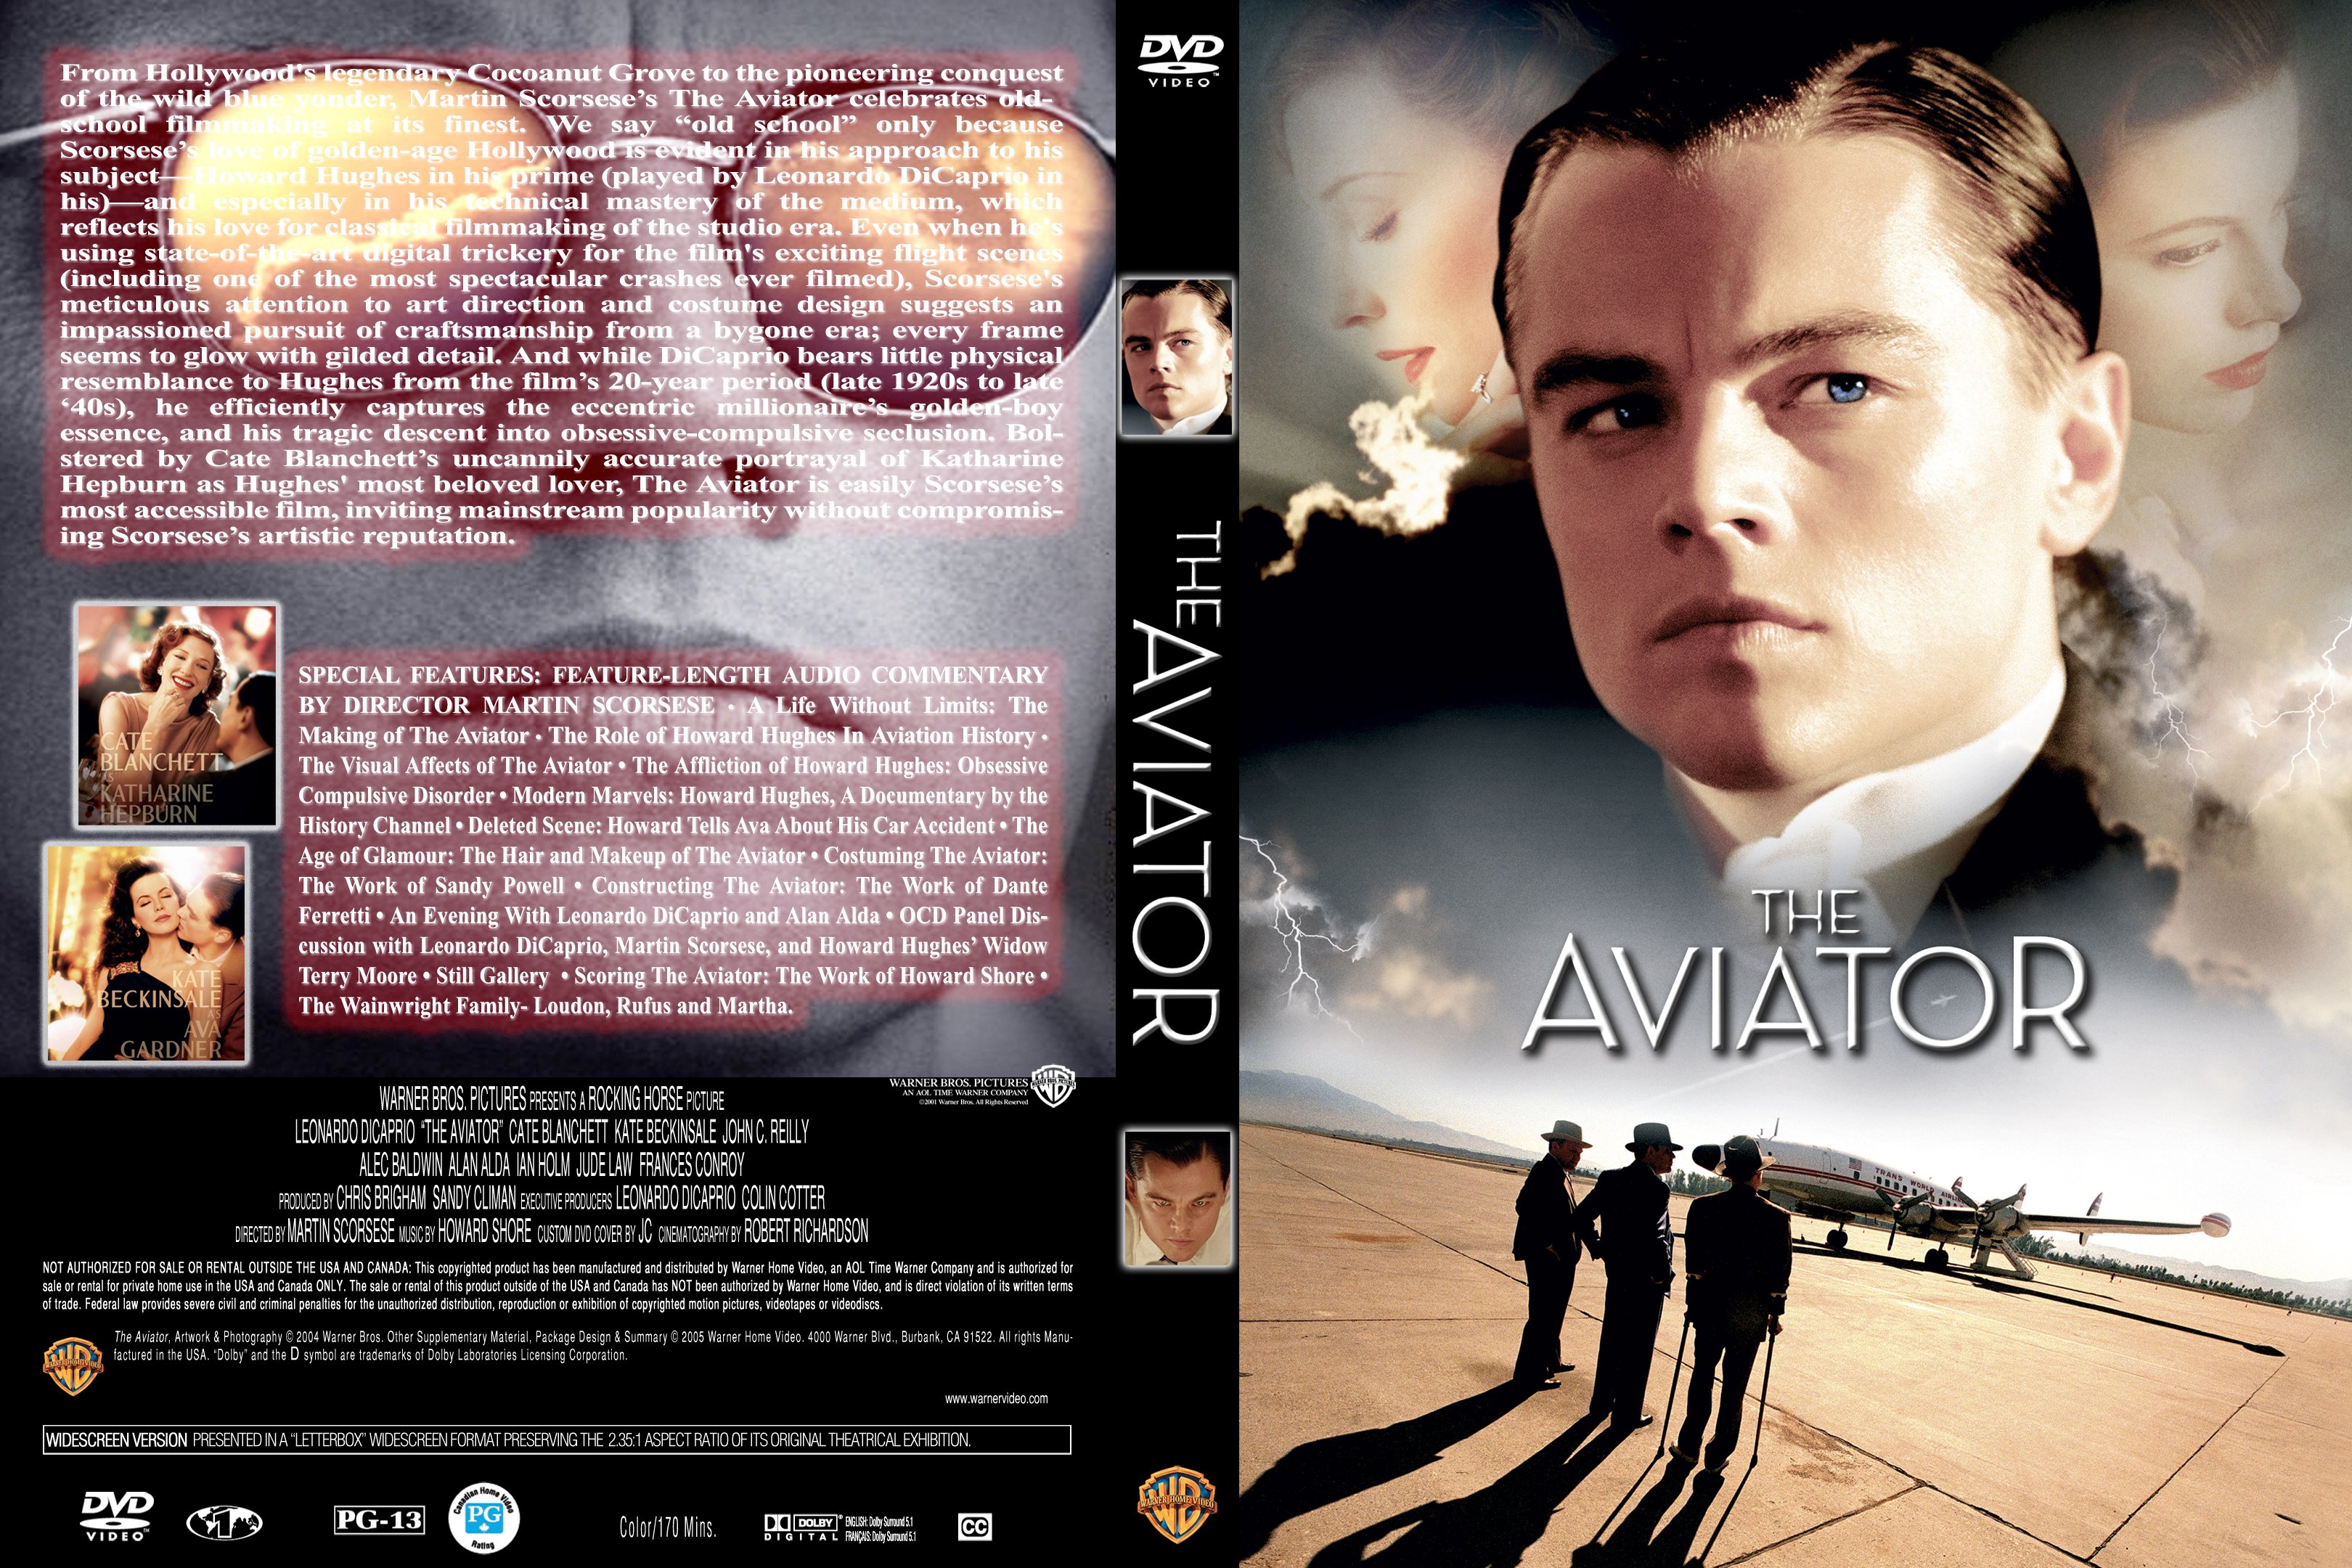 The Aviator vD 2 (2004)